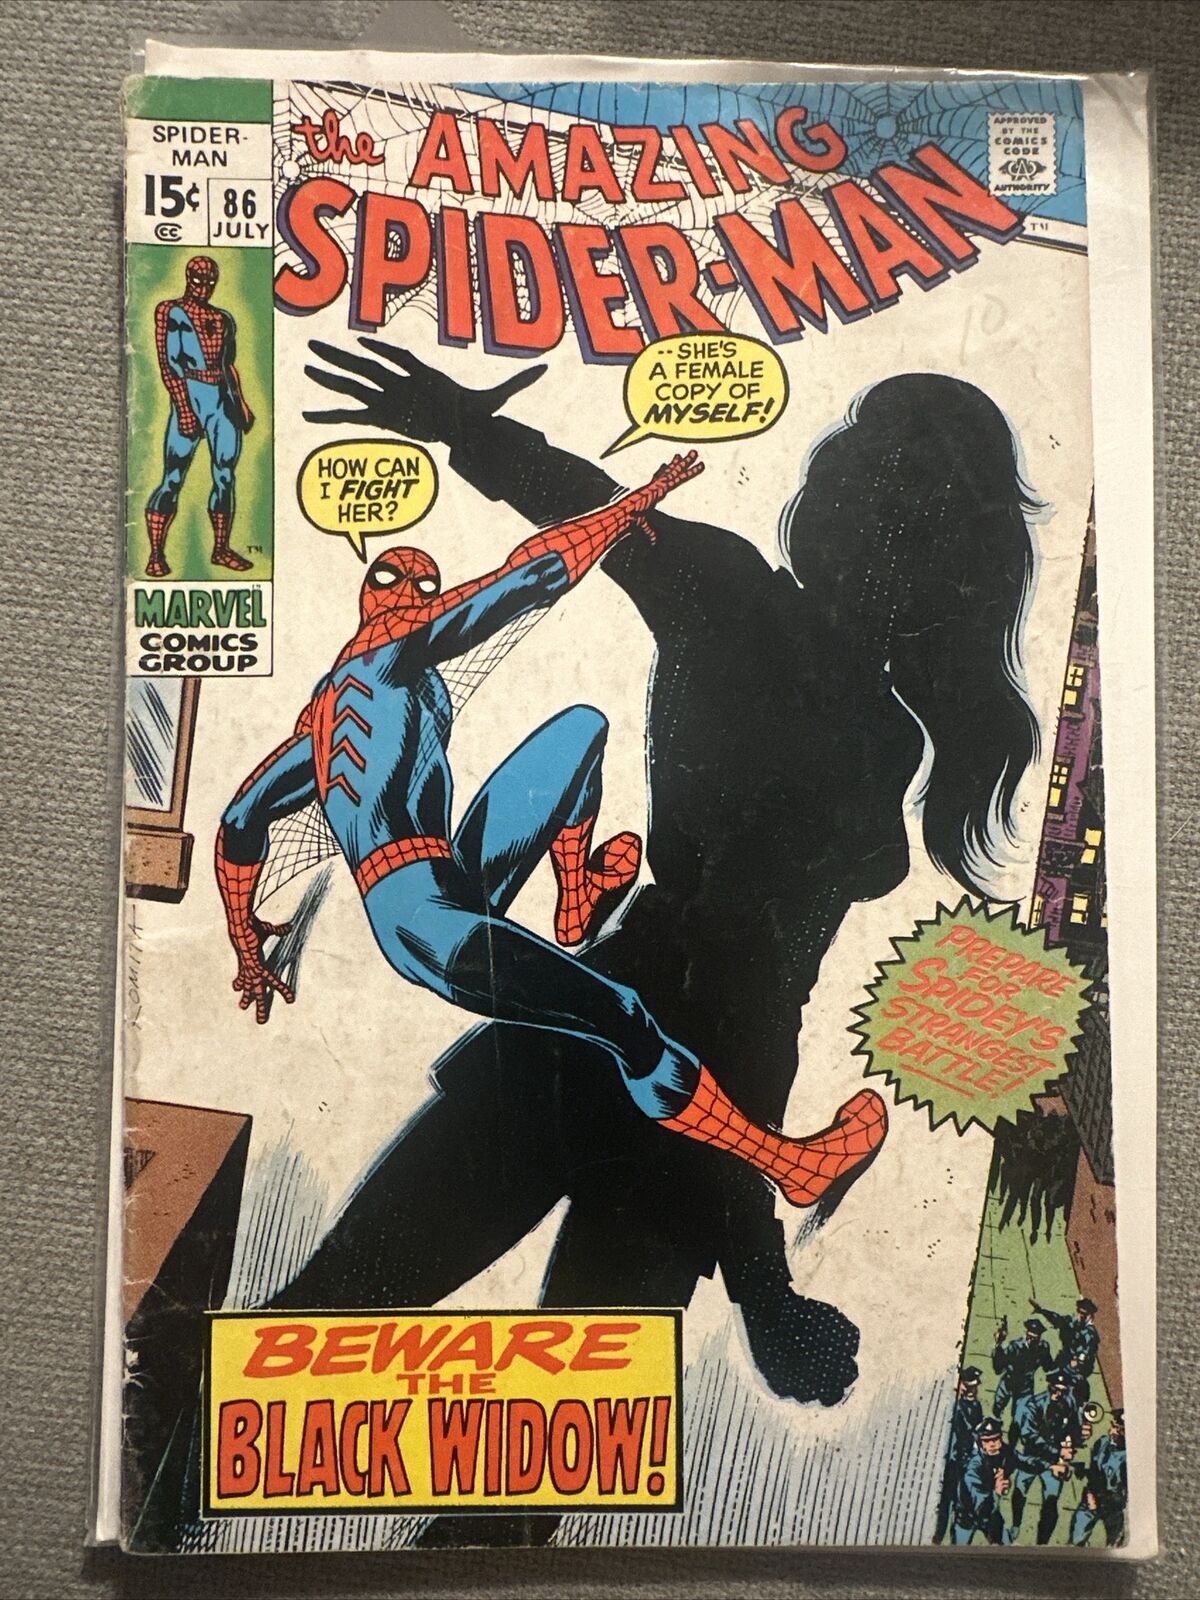 AMAZING SPIDER-MAN #86 - Black Widow Origin and New Costume (1970)